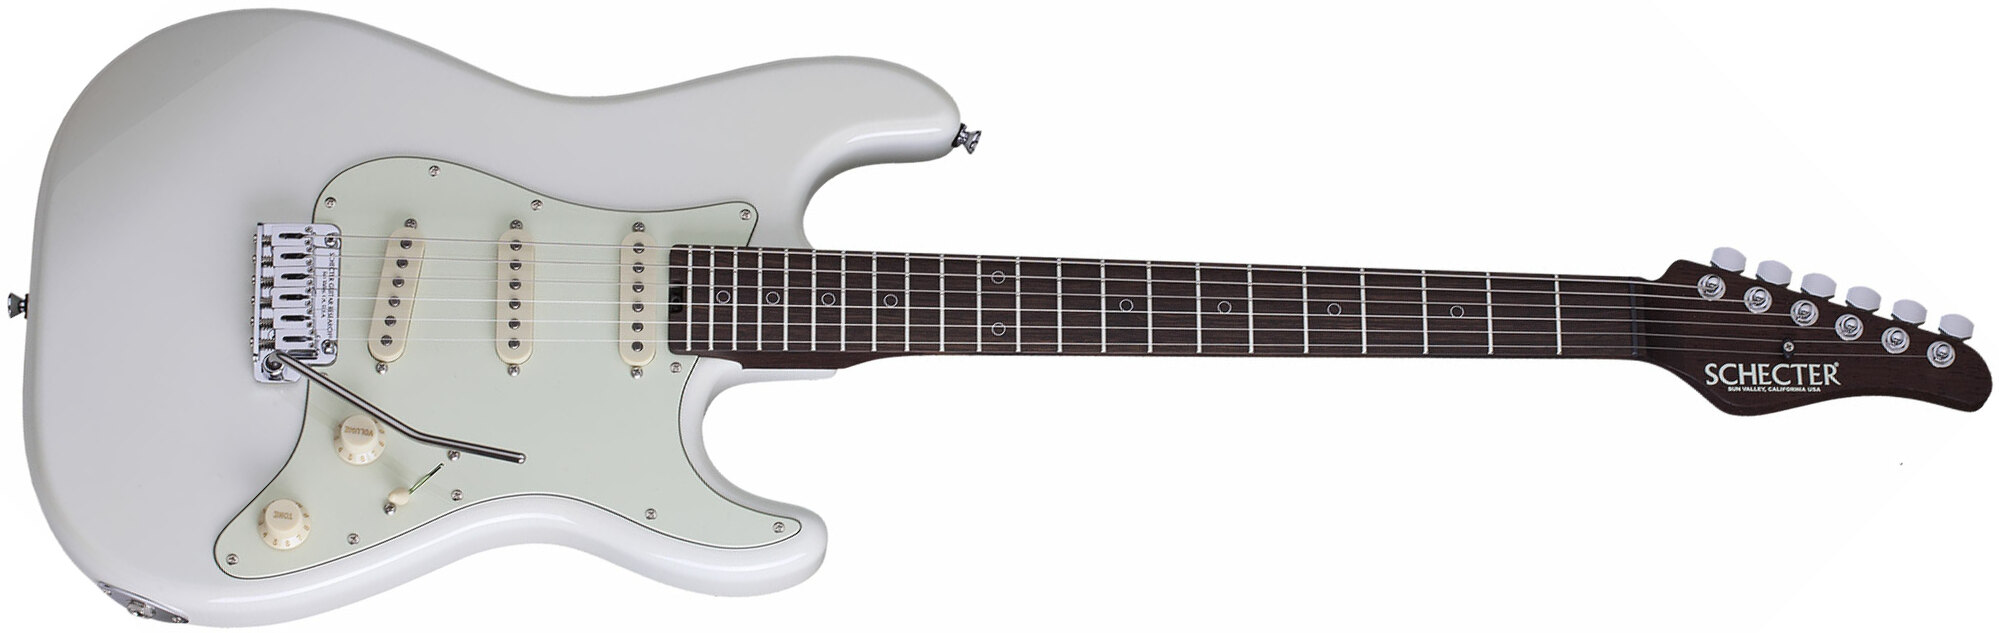 Schecter Nick Johnston Usa Signature 3s Trem Eb - Atomic Snow - Str shape electric guitar - Main picture